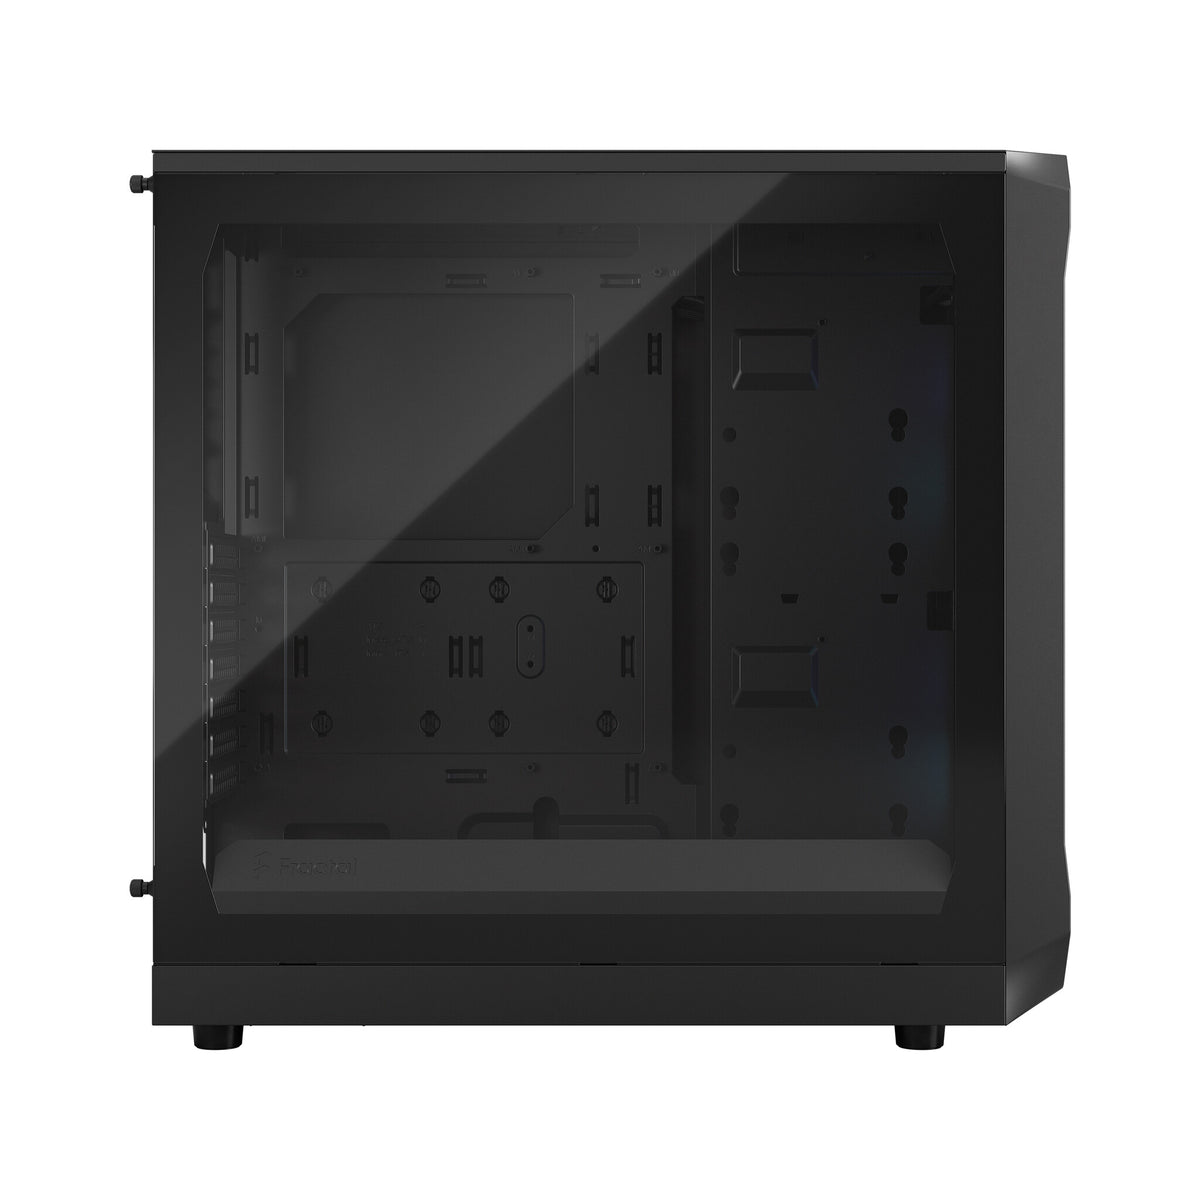 Fractal Design Focus 2 RGB - ATX Mid Tower Case in Black